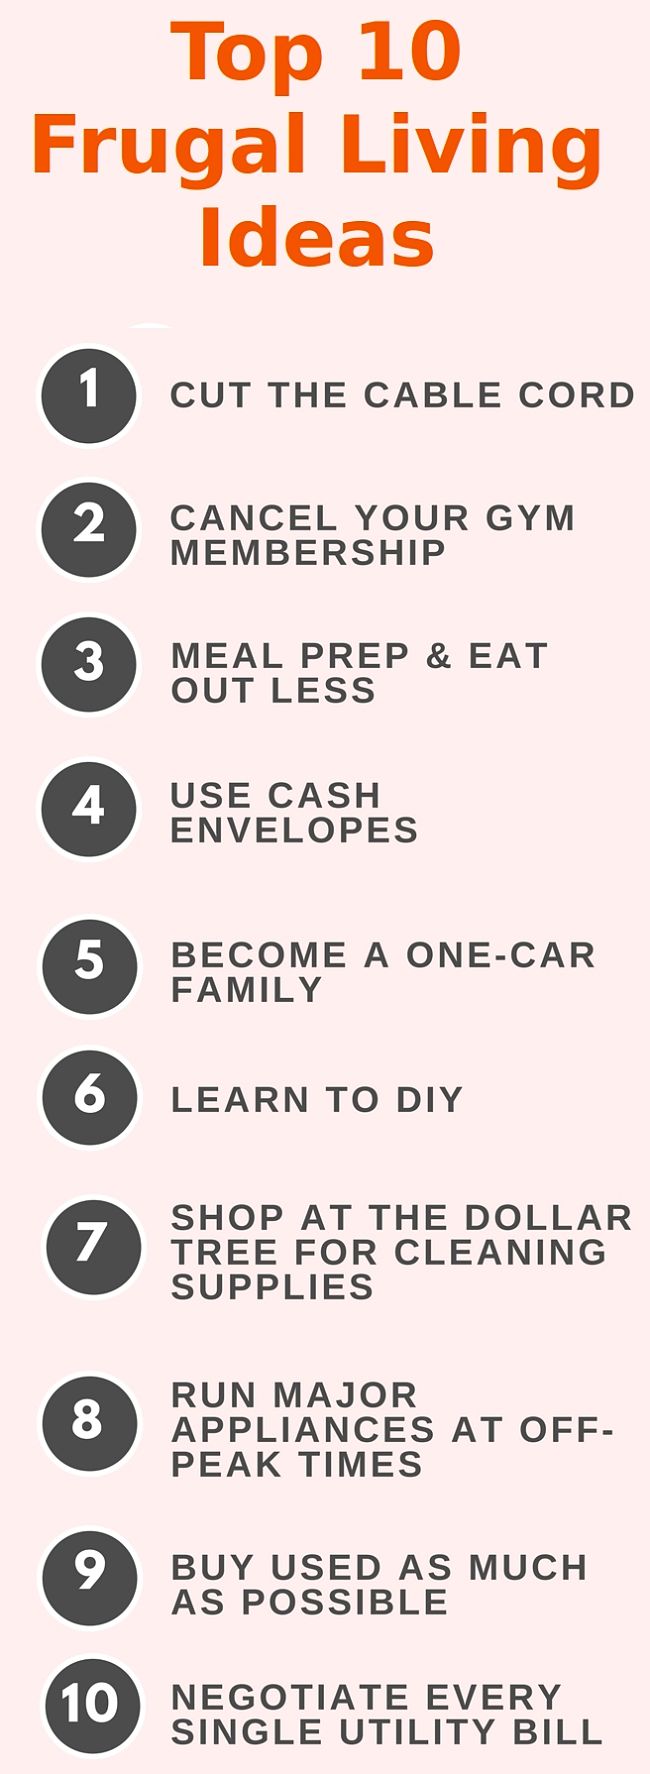 To Ten Frugal Living Tips